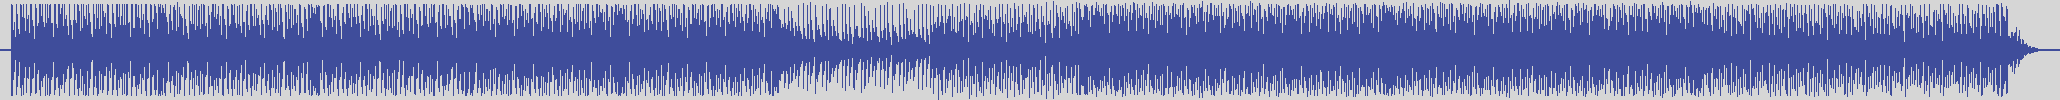 nf_boyz_records [NFY002] Donald Teixeira - Contemplation [Plastic Bass Mix] audio wave form